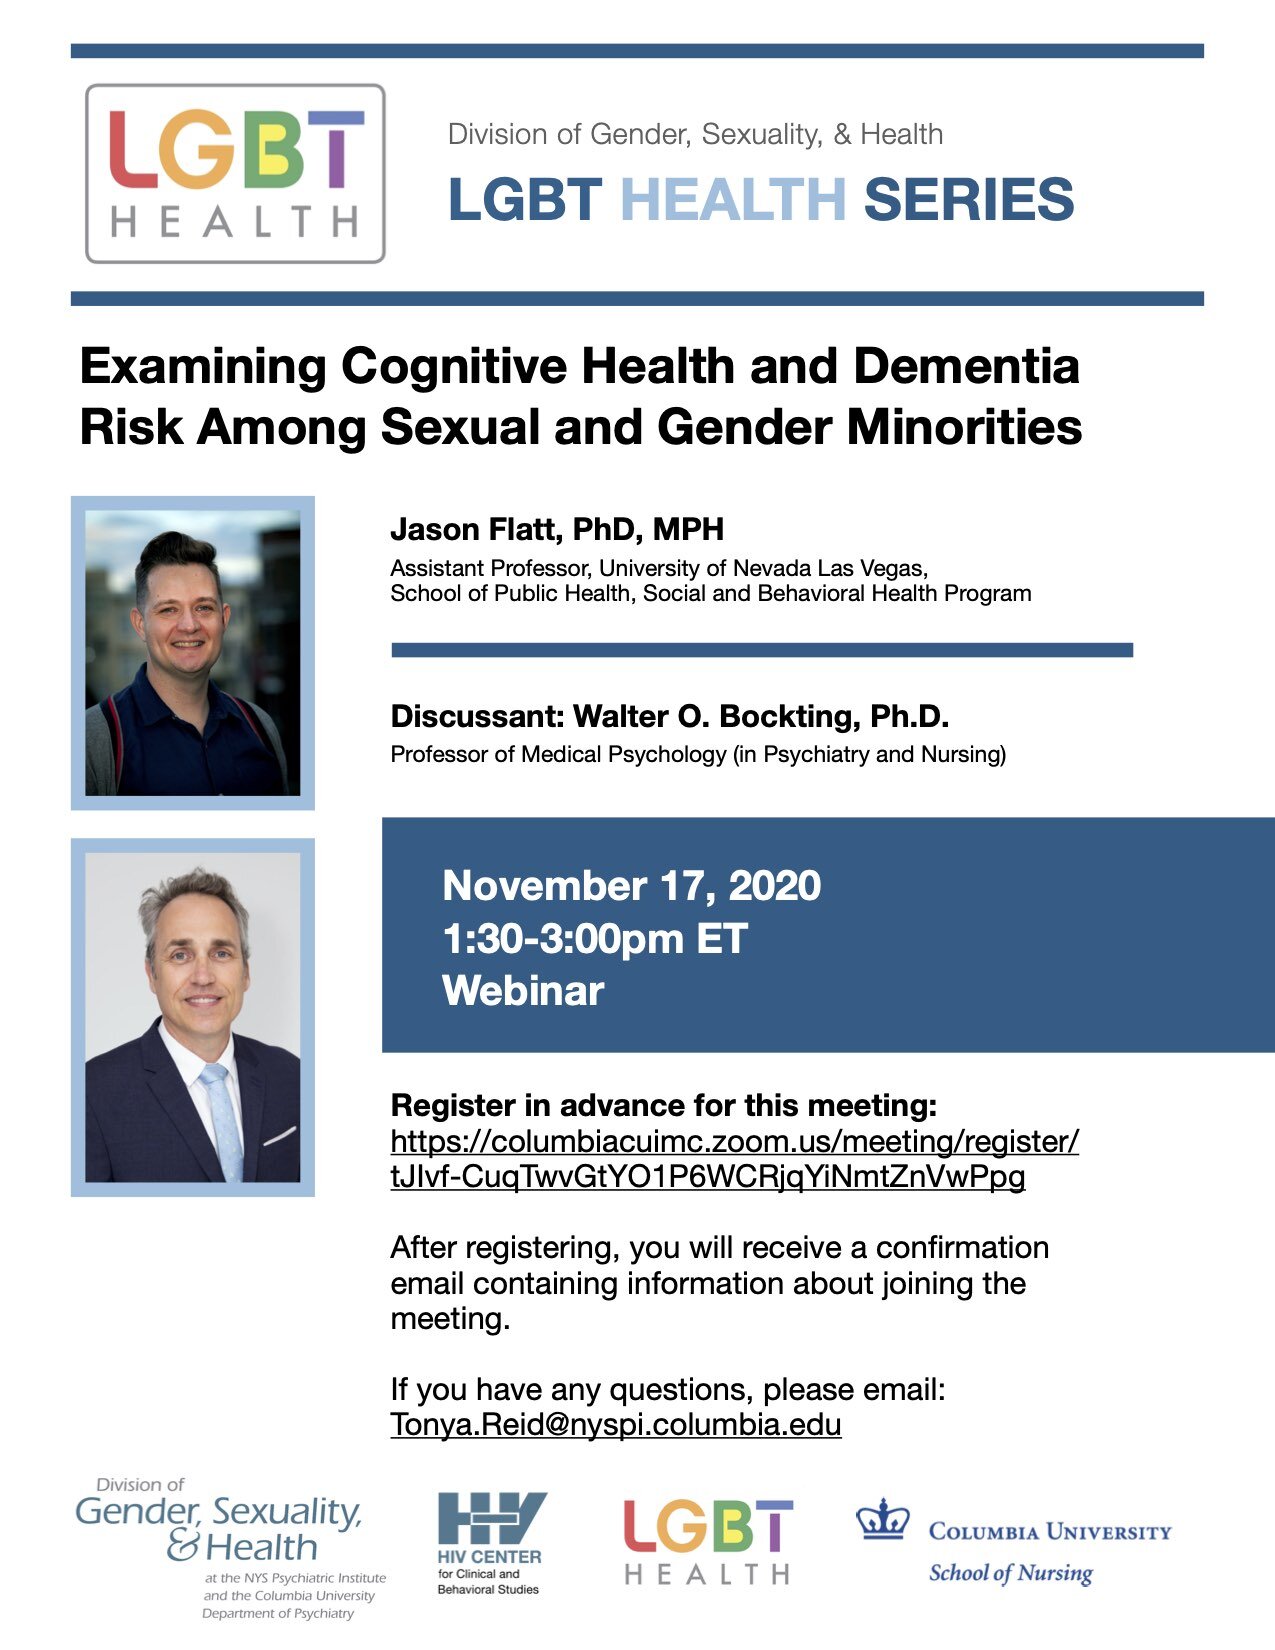 Nov 17 2020 LGBT Health Series.jpg